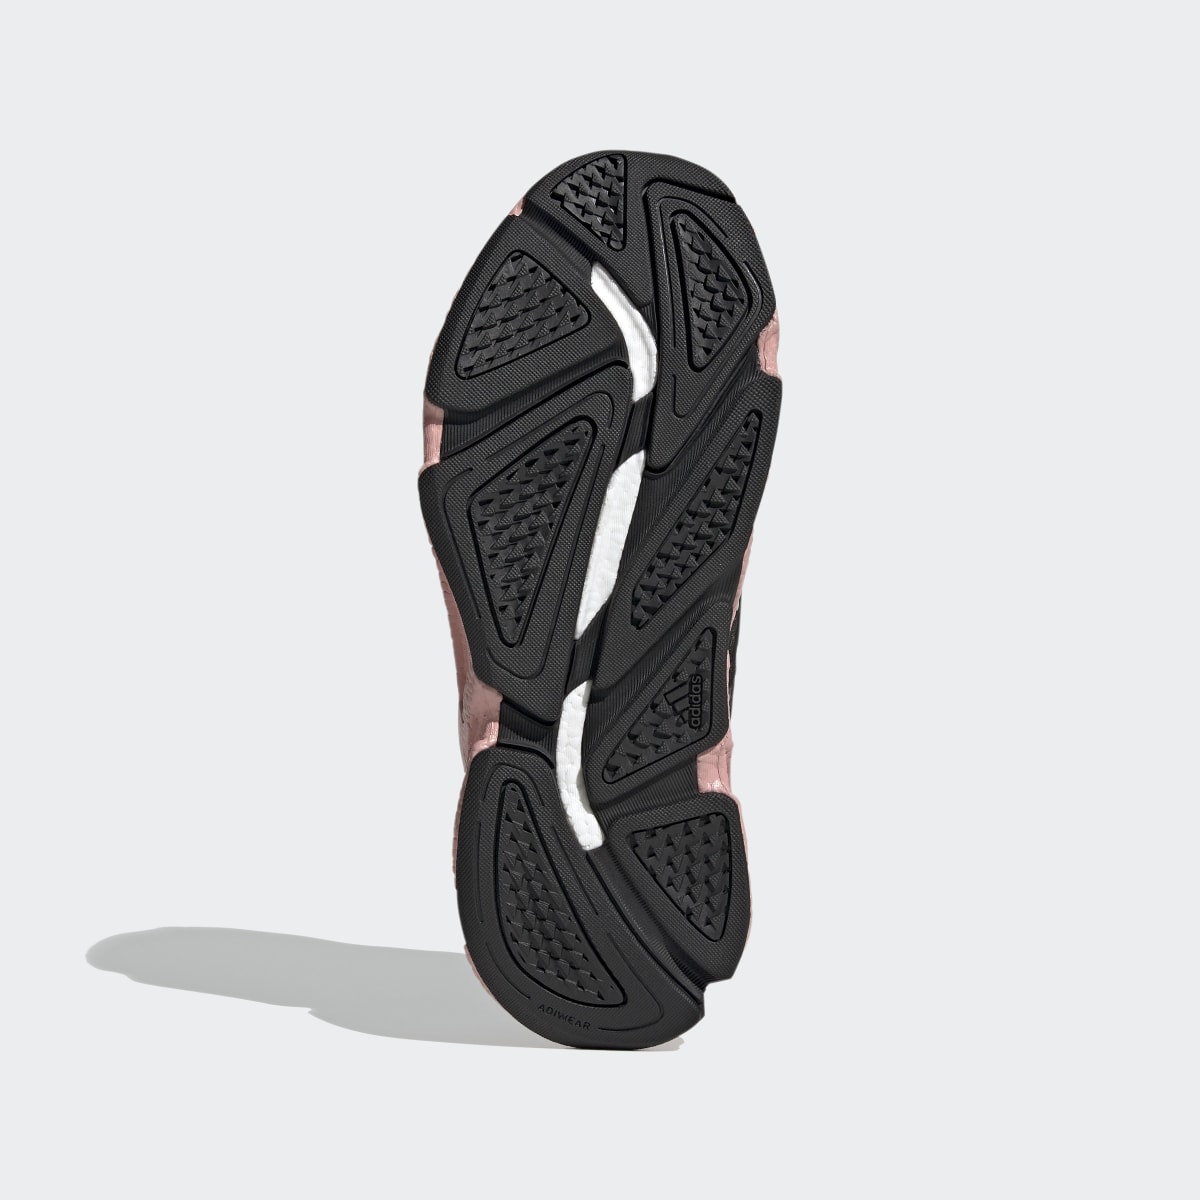 Adidas Zapatilla Karlie Kloss X9000. 6